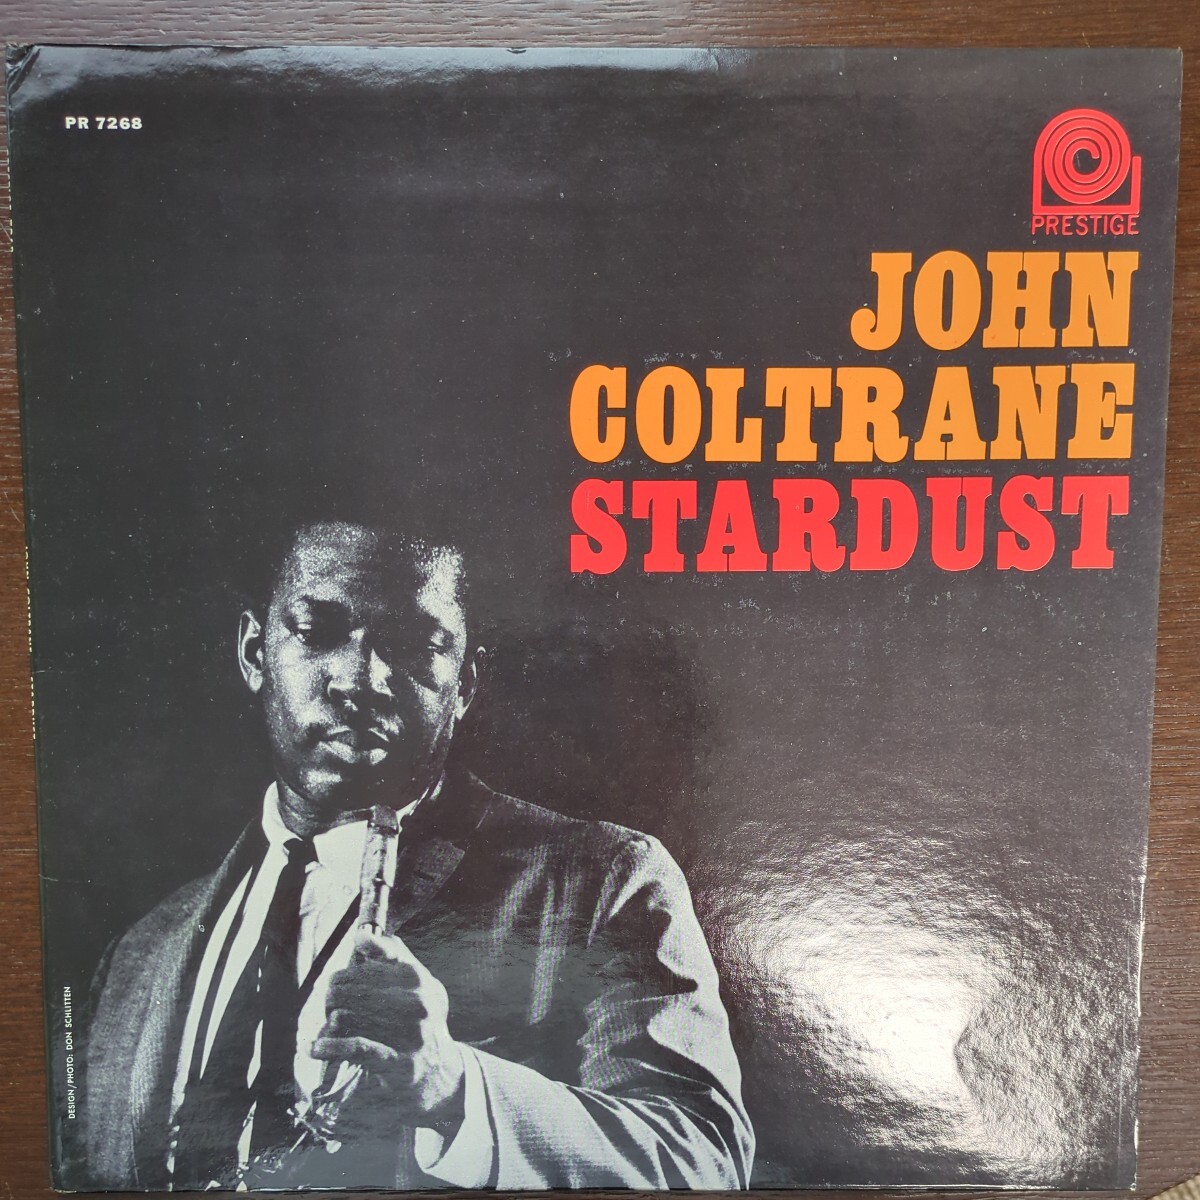 US John Coltrane Stardust ジョン コルトレーン van gelder RVG record レコード LP アナログ vinyl JAZZ freddy hubbard paul chambers _画像1